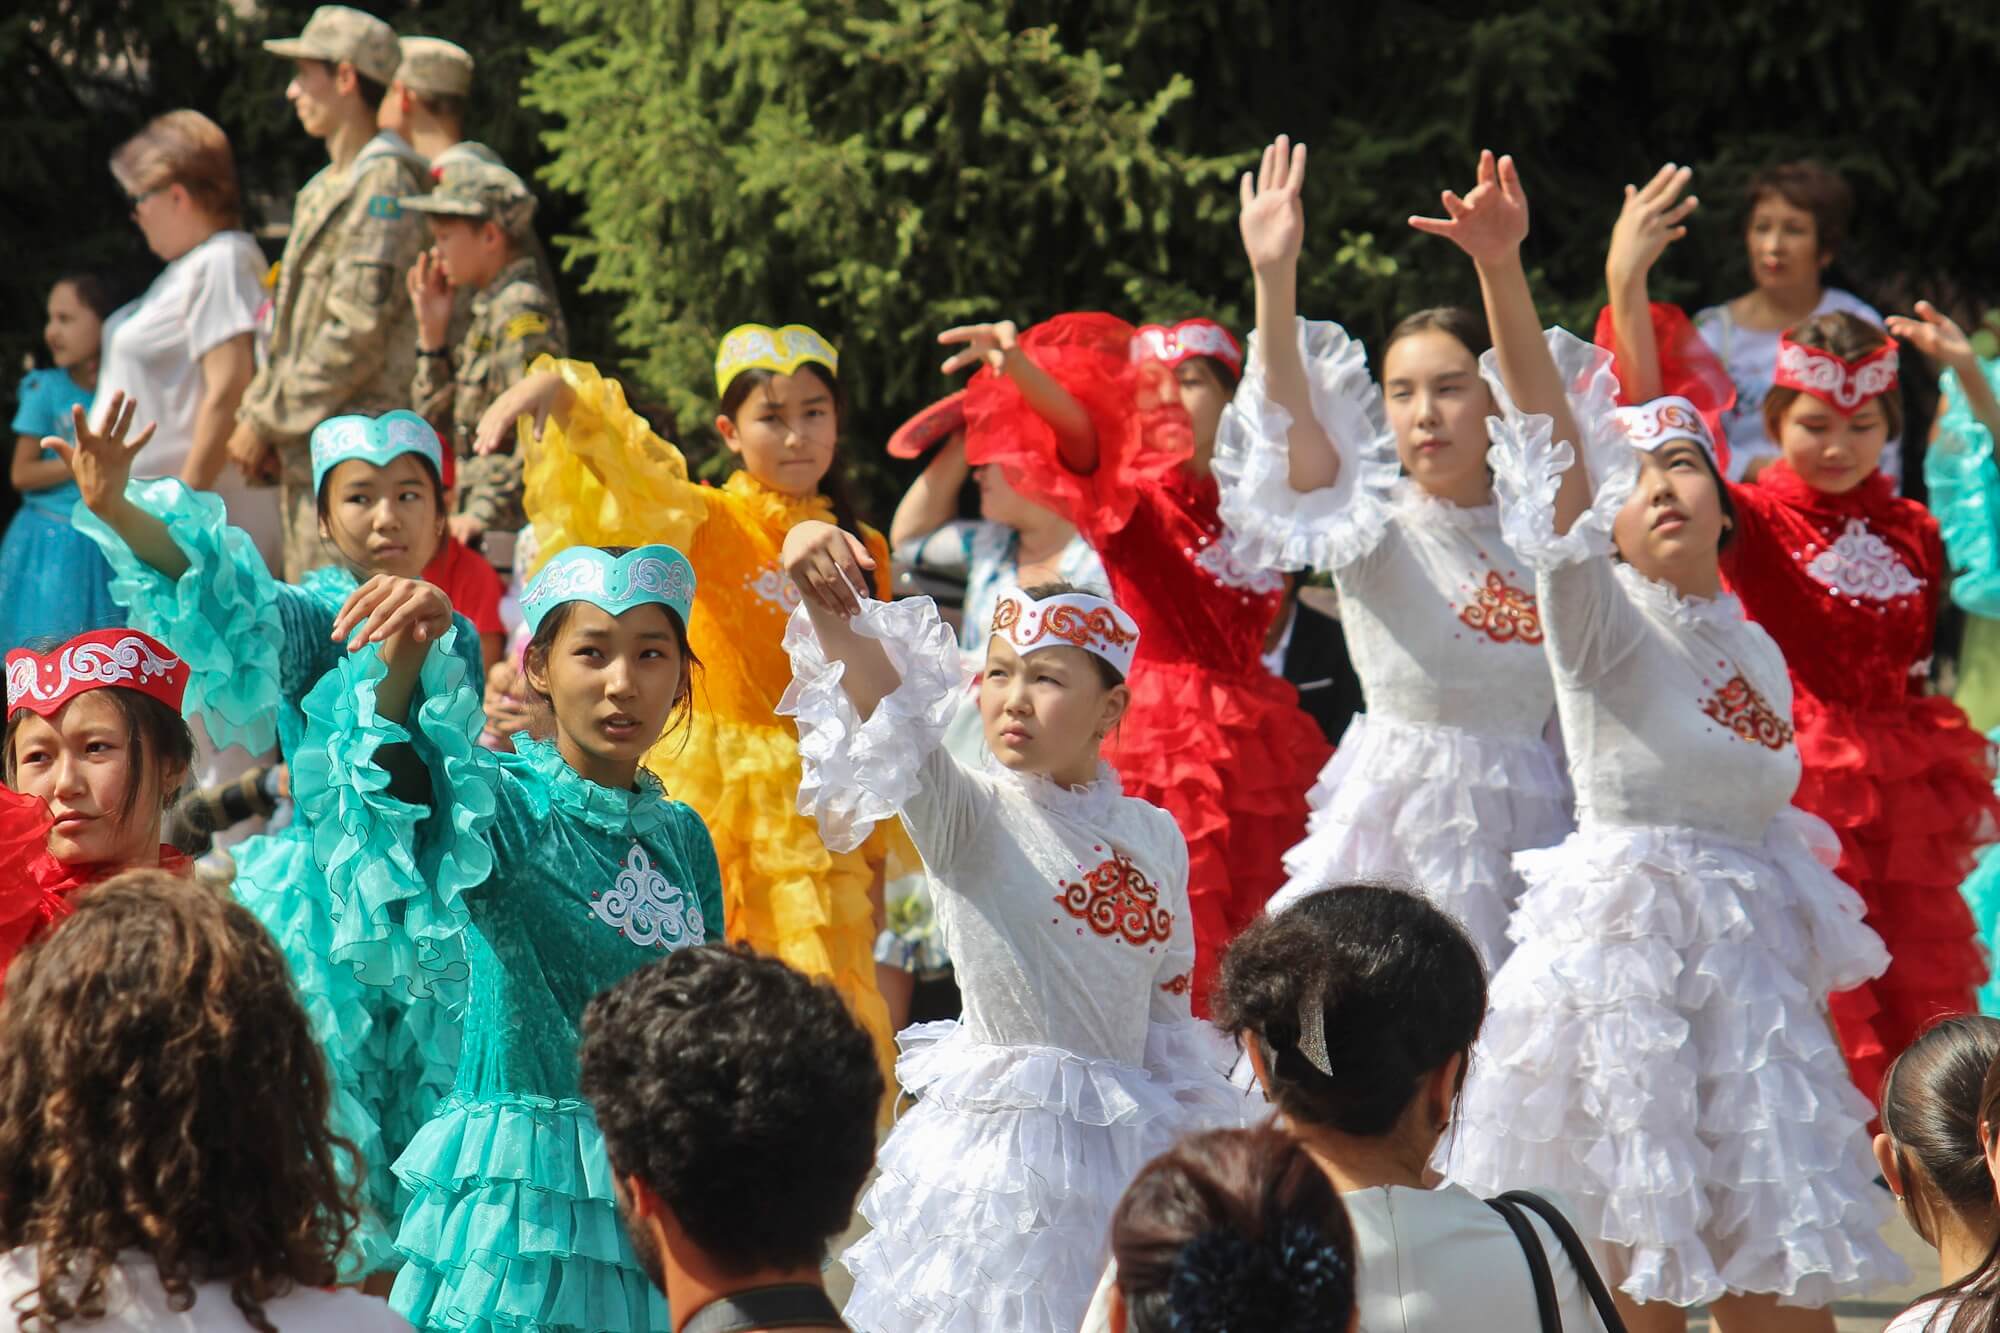 Info Shymkent - Dances with traditional kazakh dresses during Nauryz